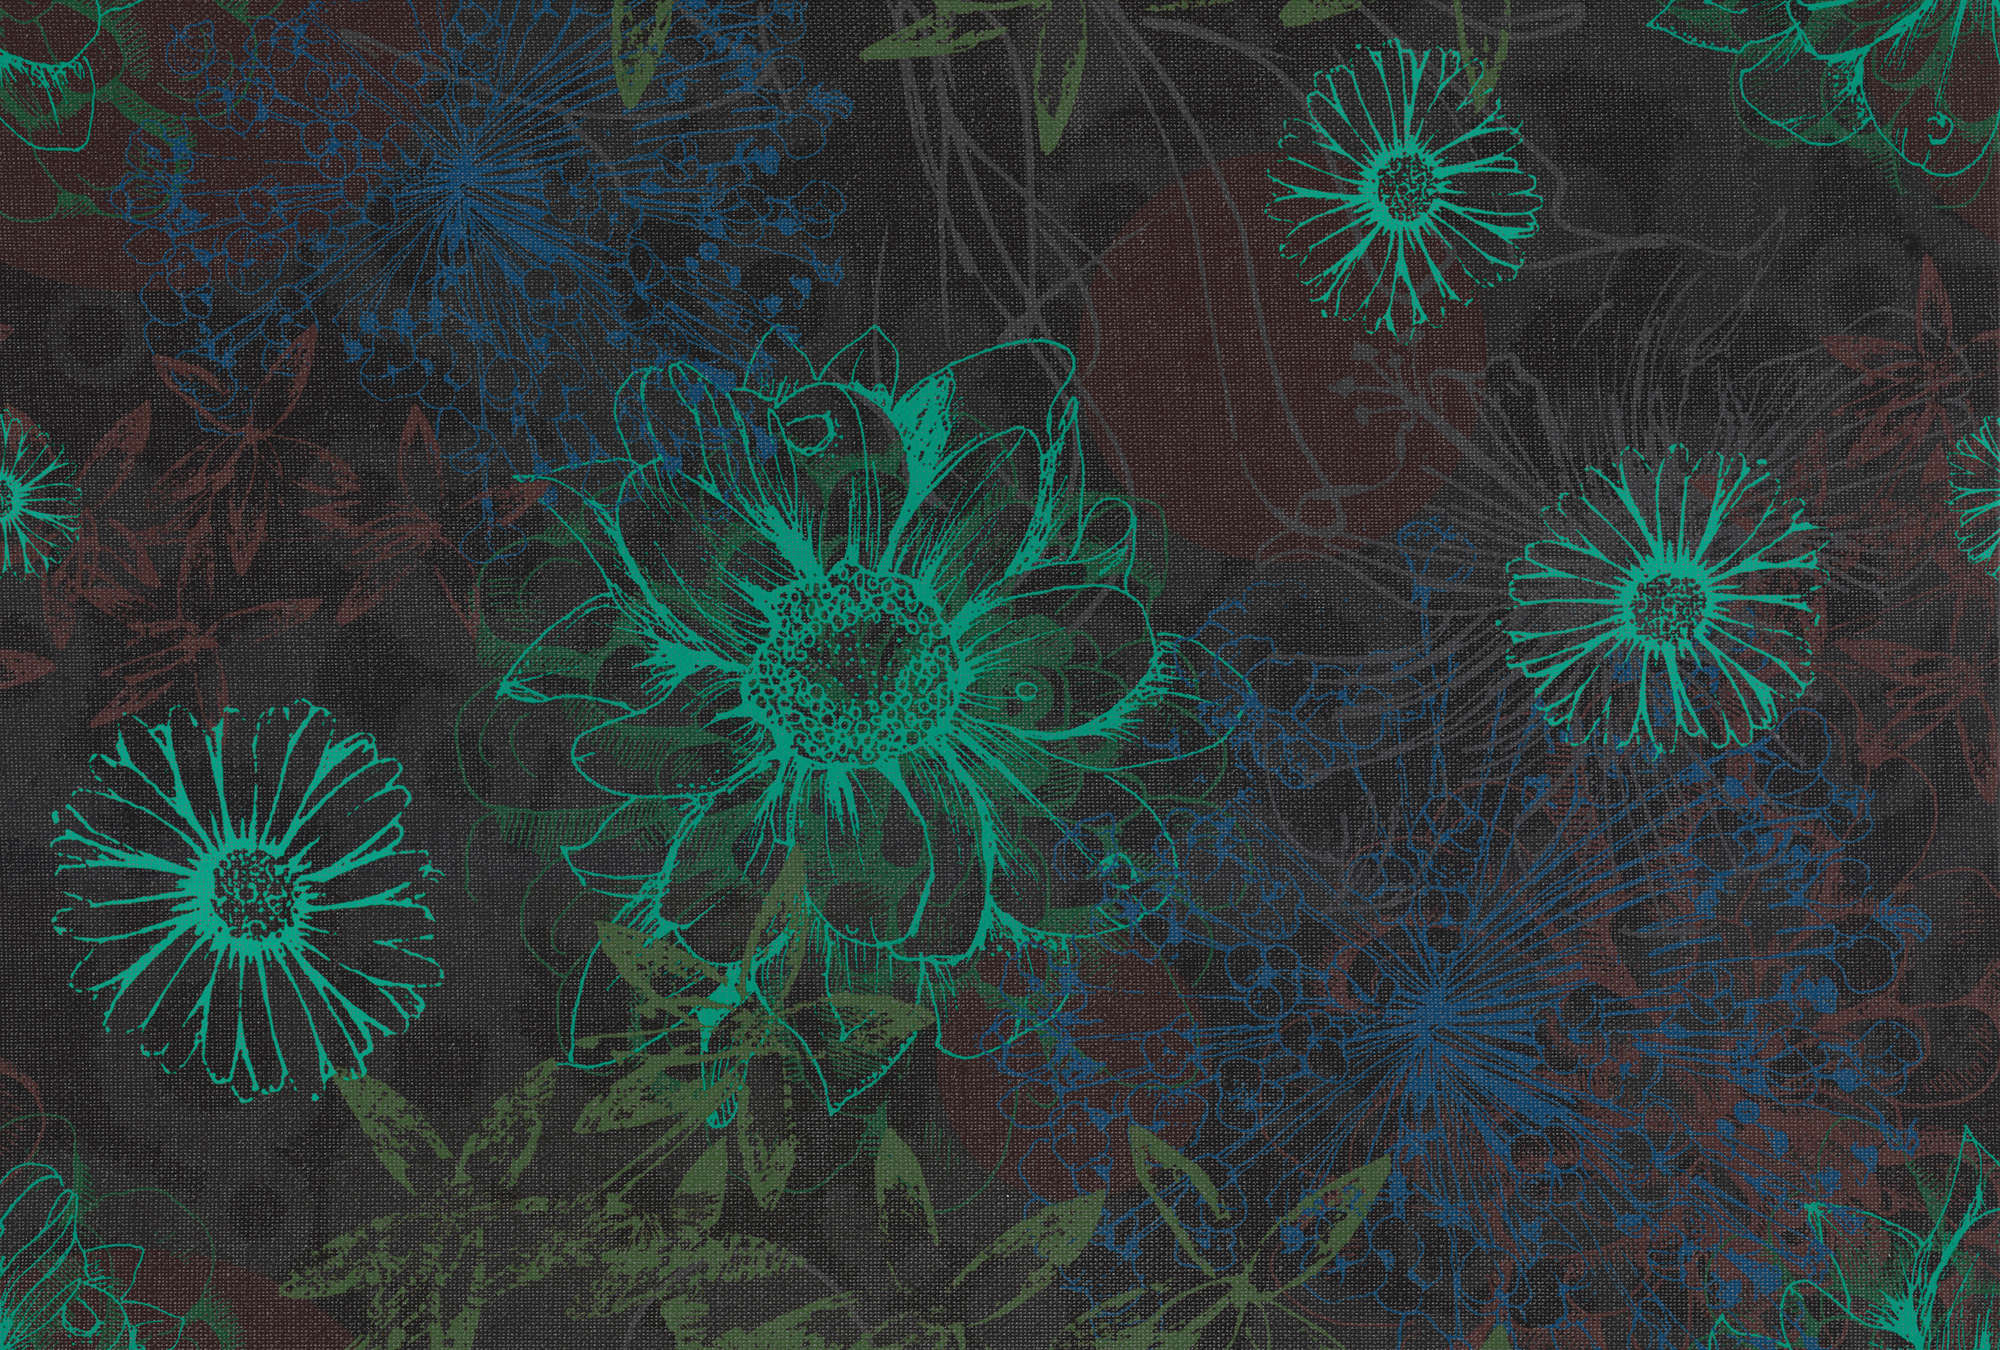             Papier peint fleuri avec motif floral lumineux - vert, bleu, marron
        